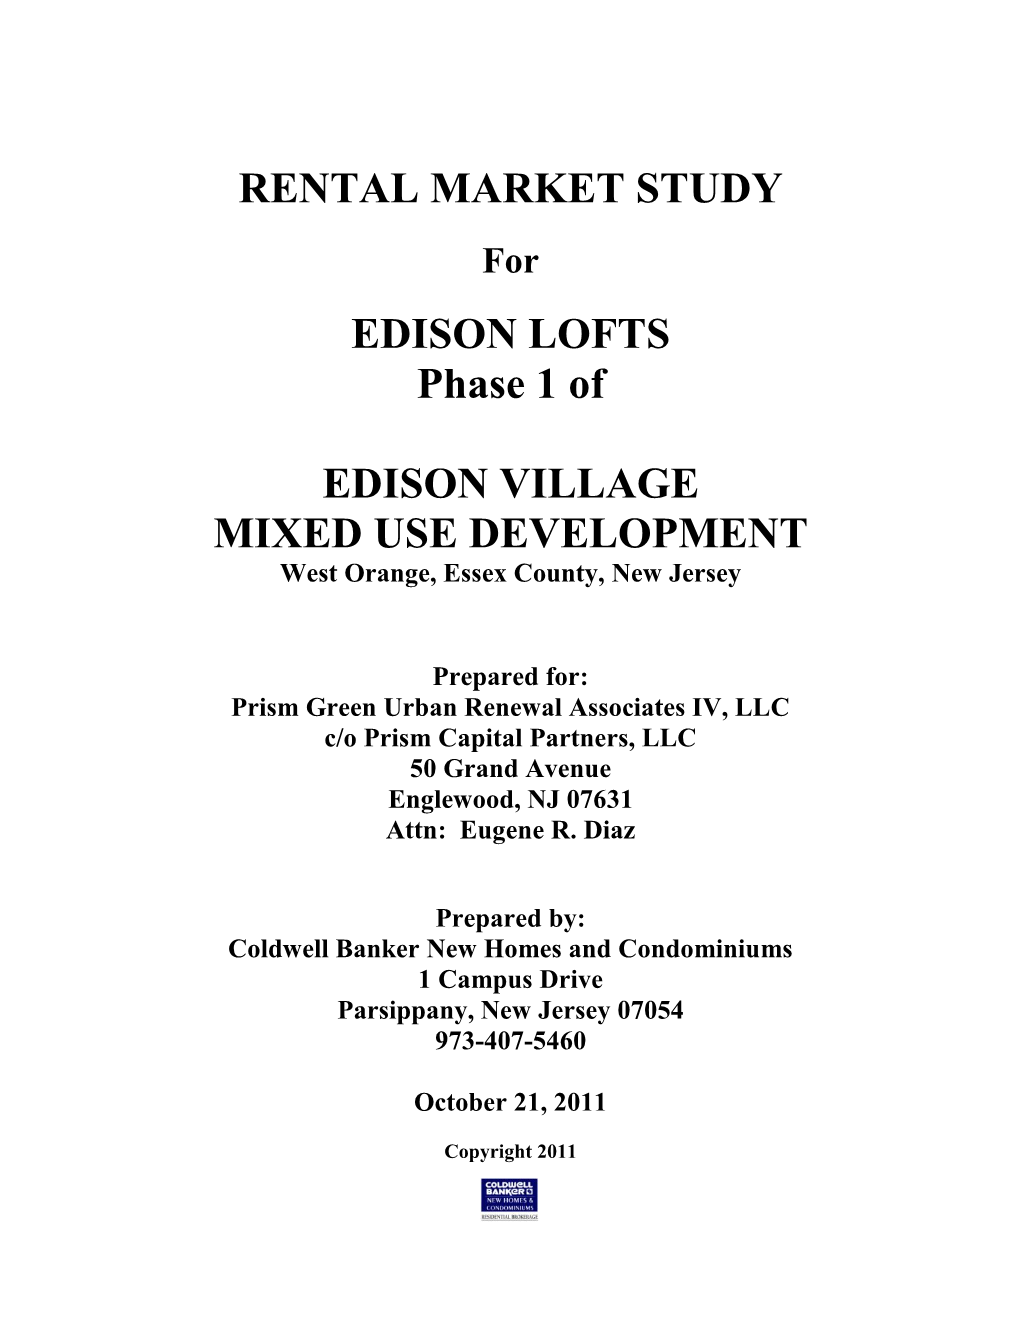 Retail Market Study for Edison Lofts Phase 1